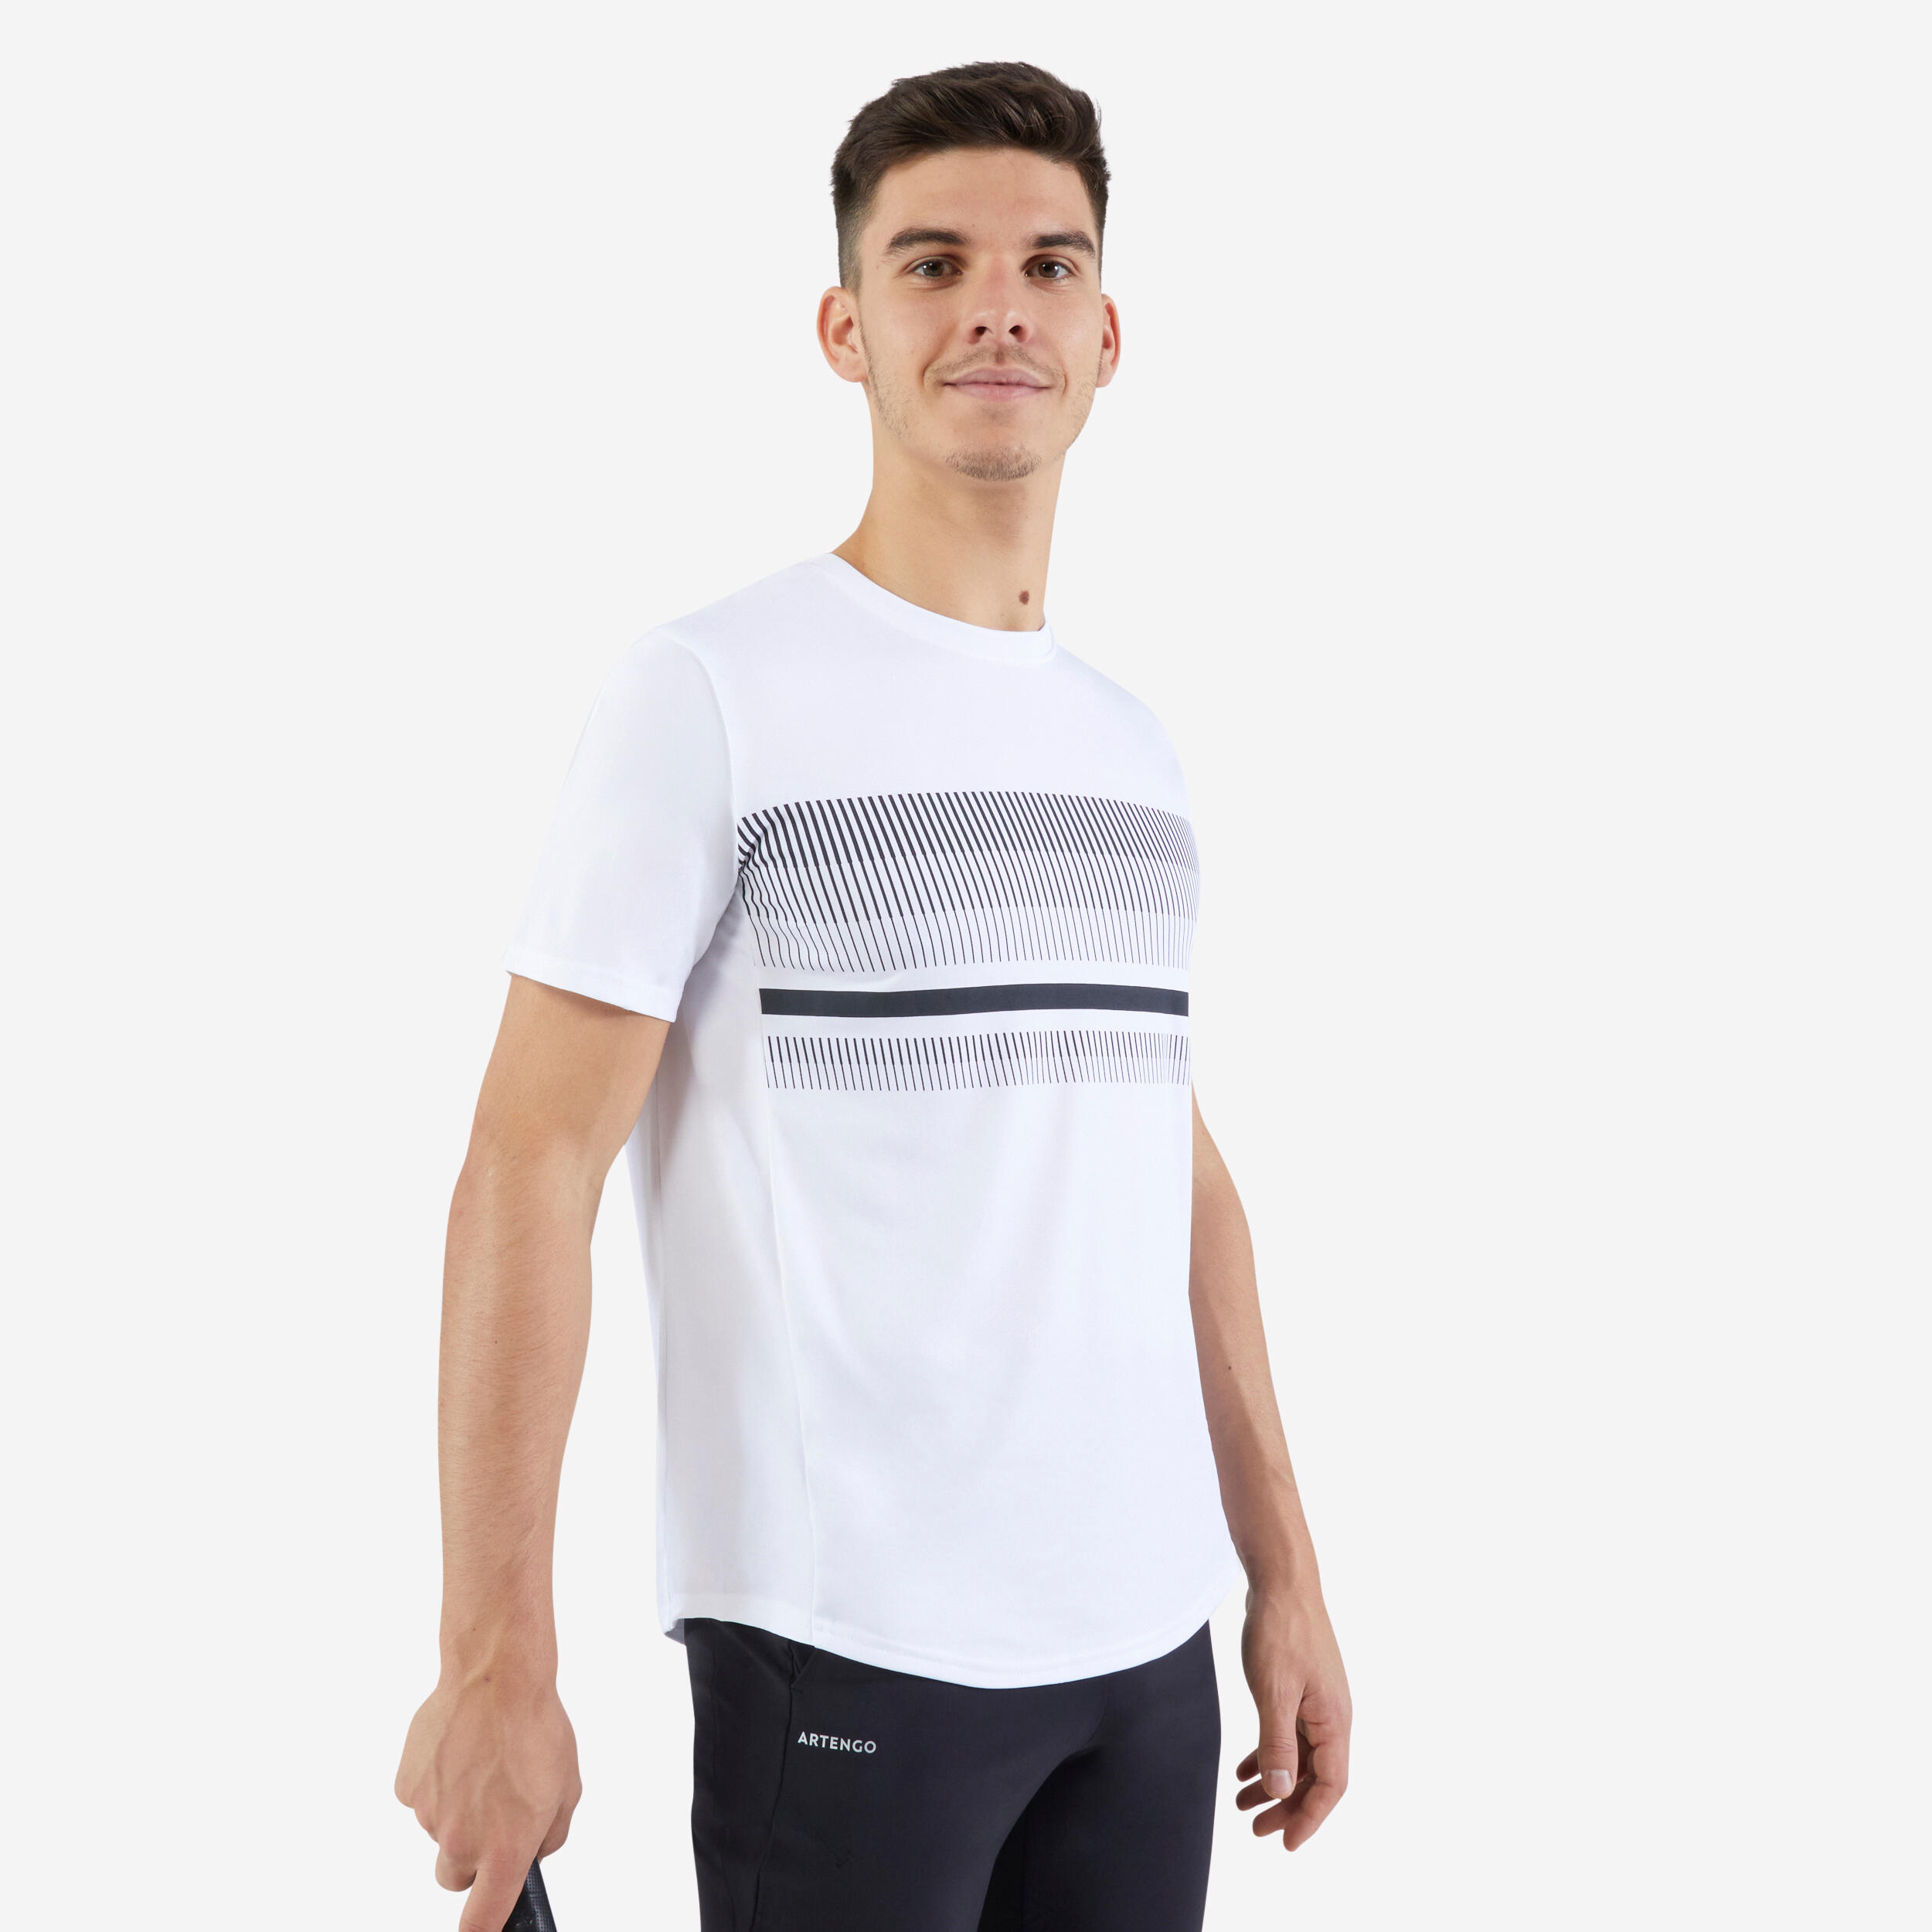 ARTENGO Men's Short-Sleeved Tennis T-Shirt Essential - White